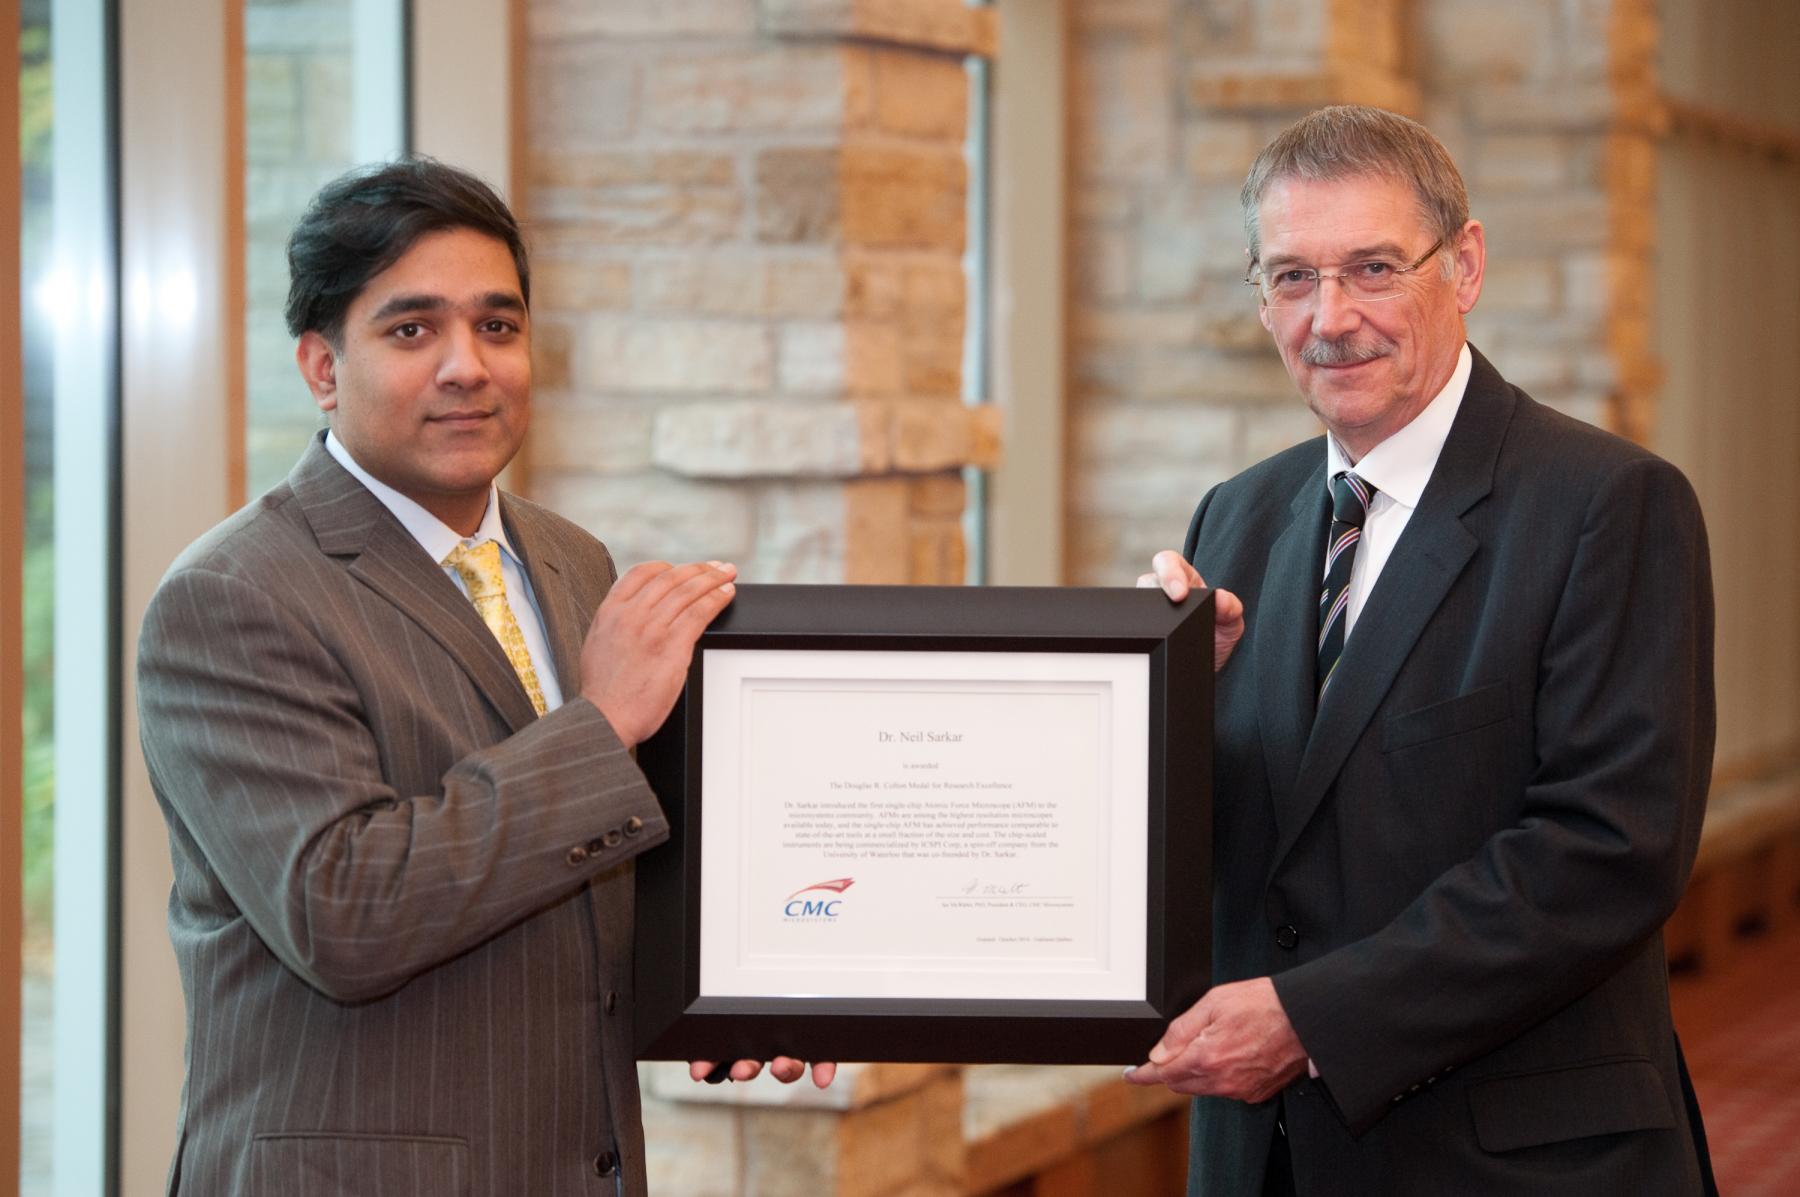 Dr. Neil Sarkar & Dr. Ian McWalter holding Colton certificate